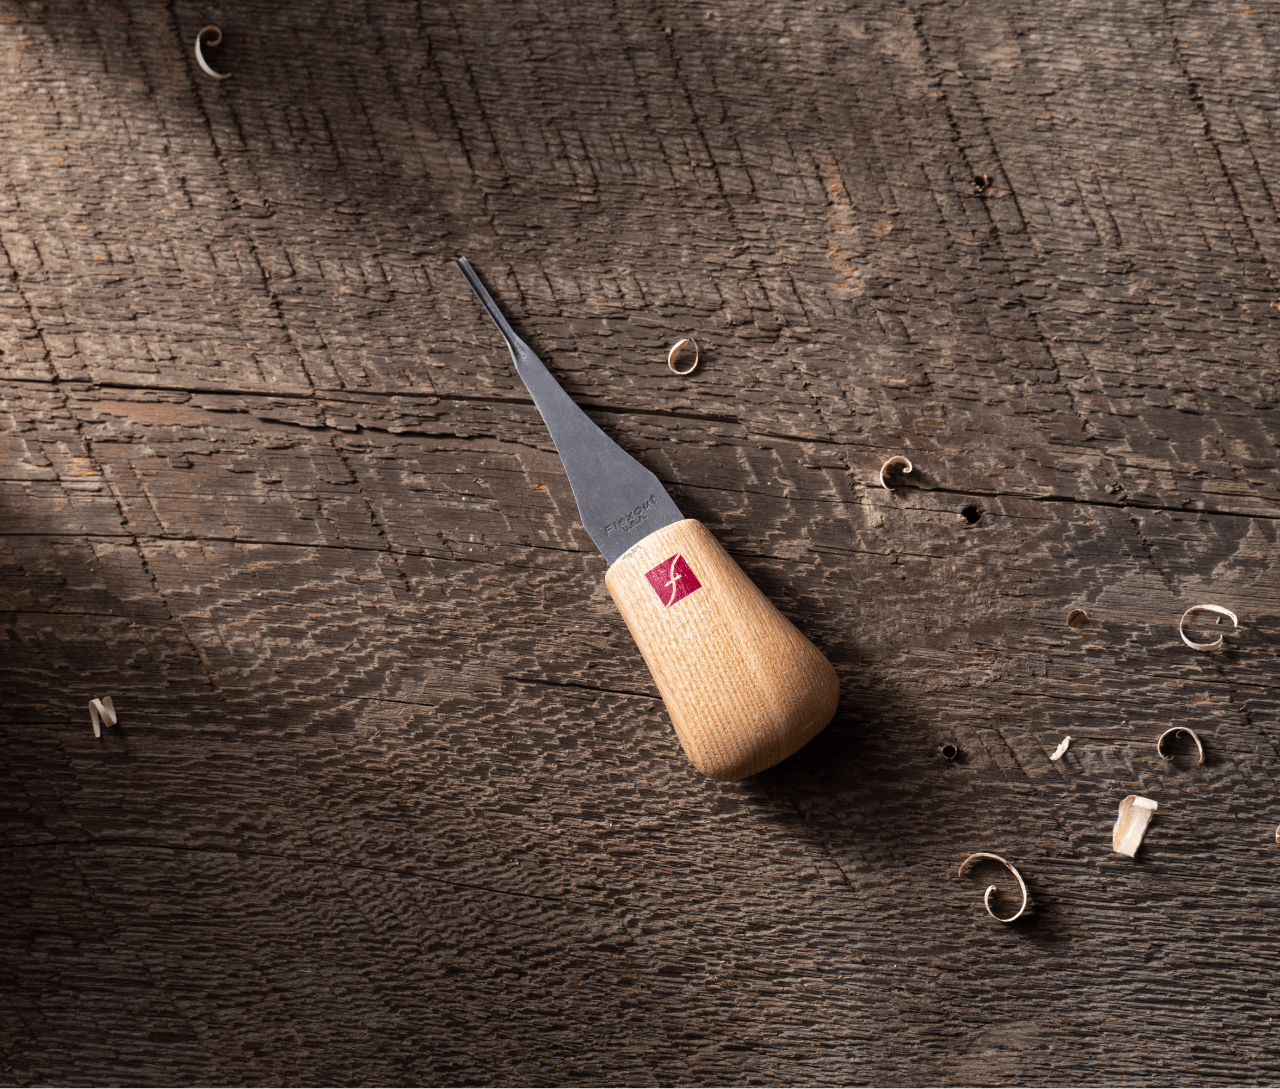 Flexcut Wood Carving Hip Knife KN30 for sale online